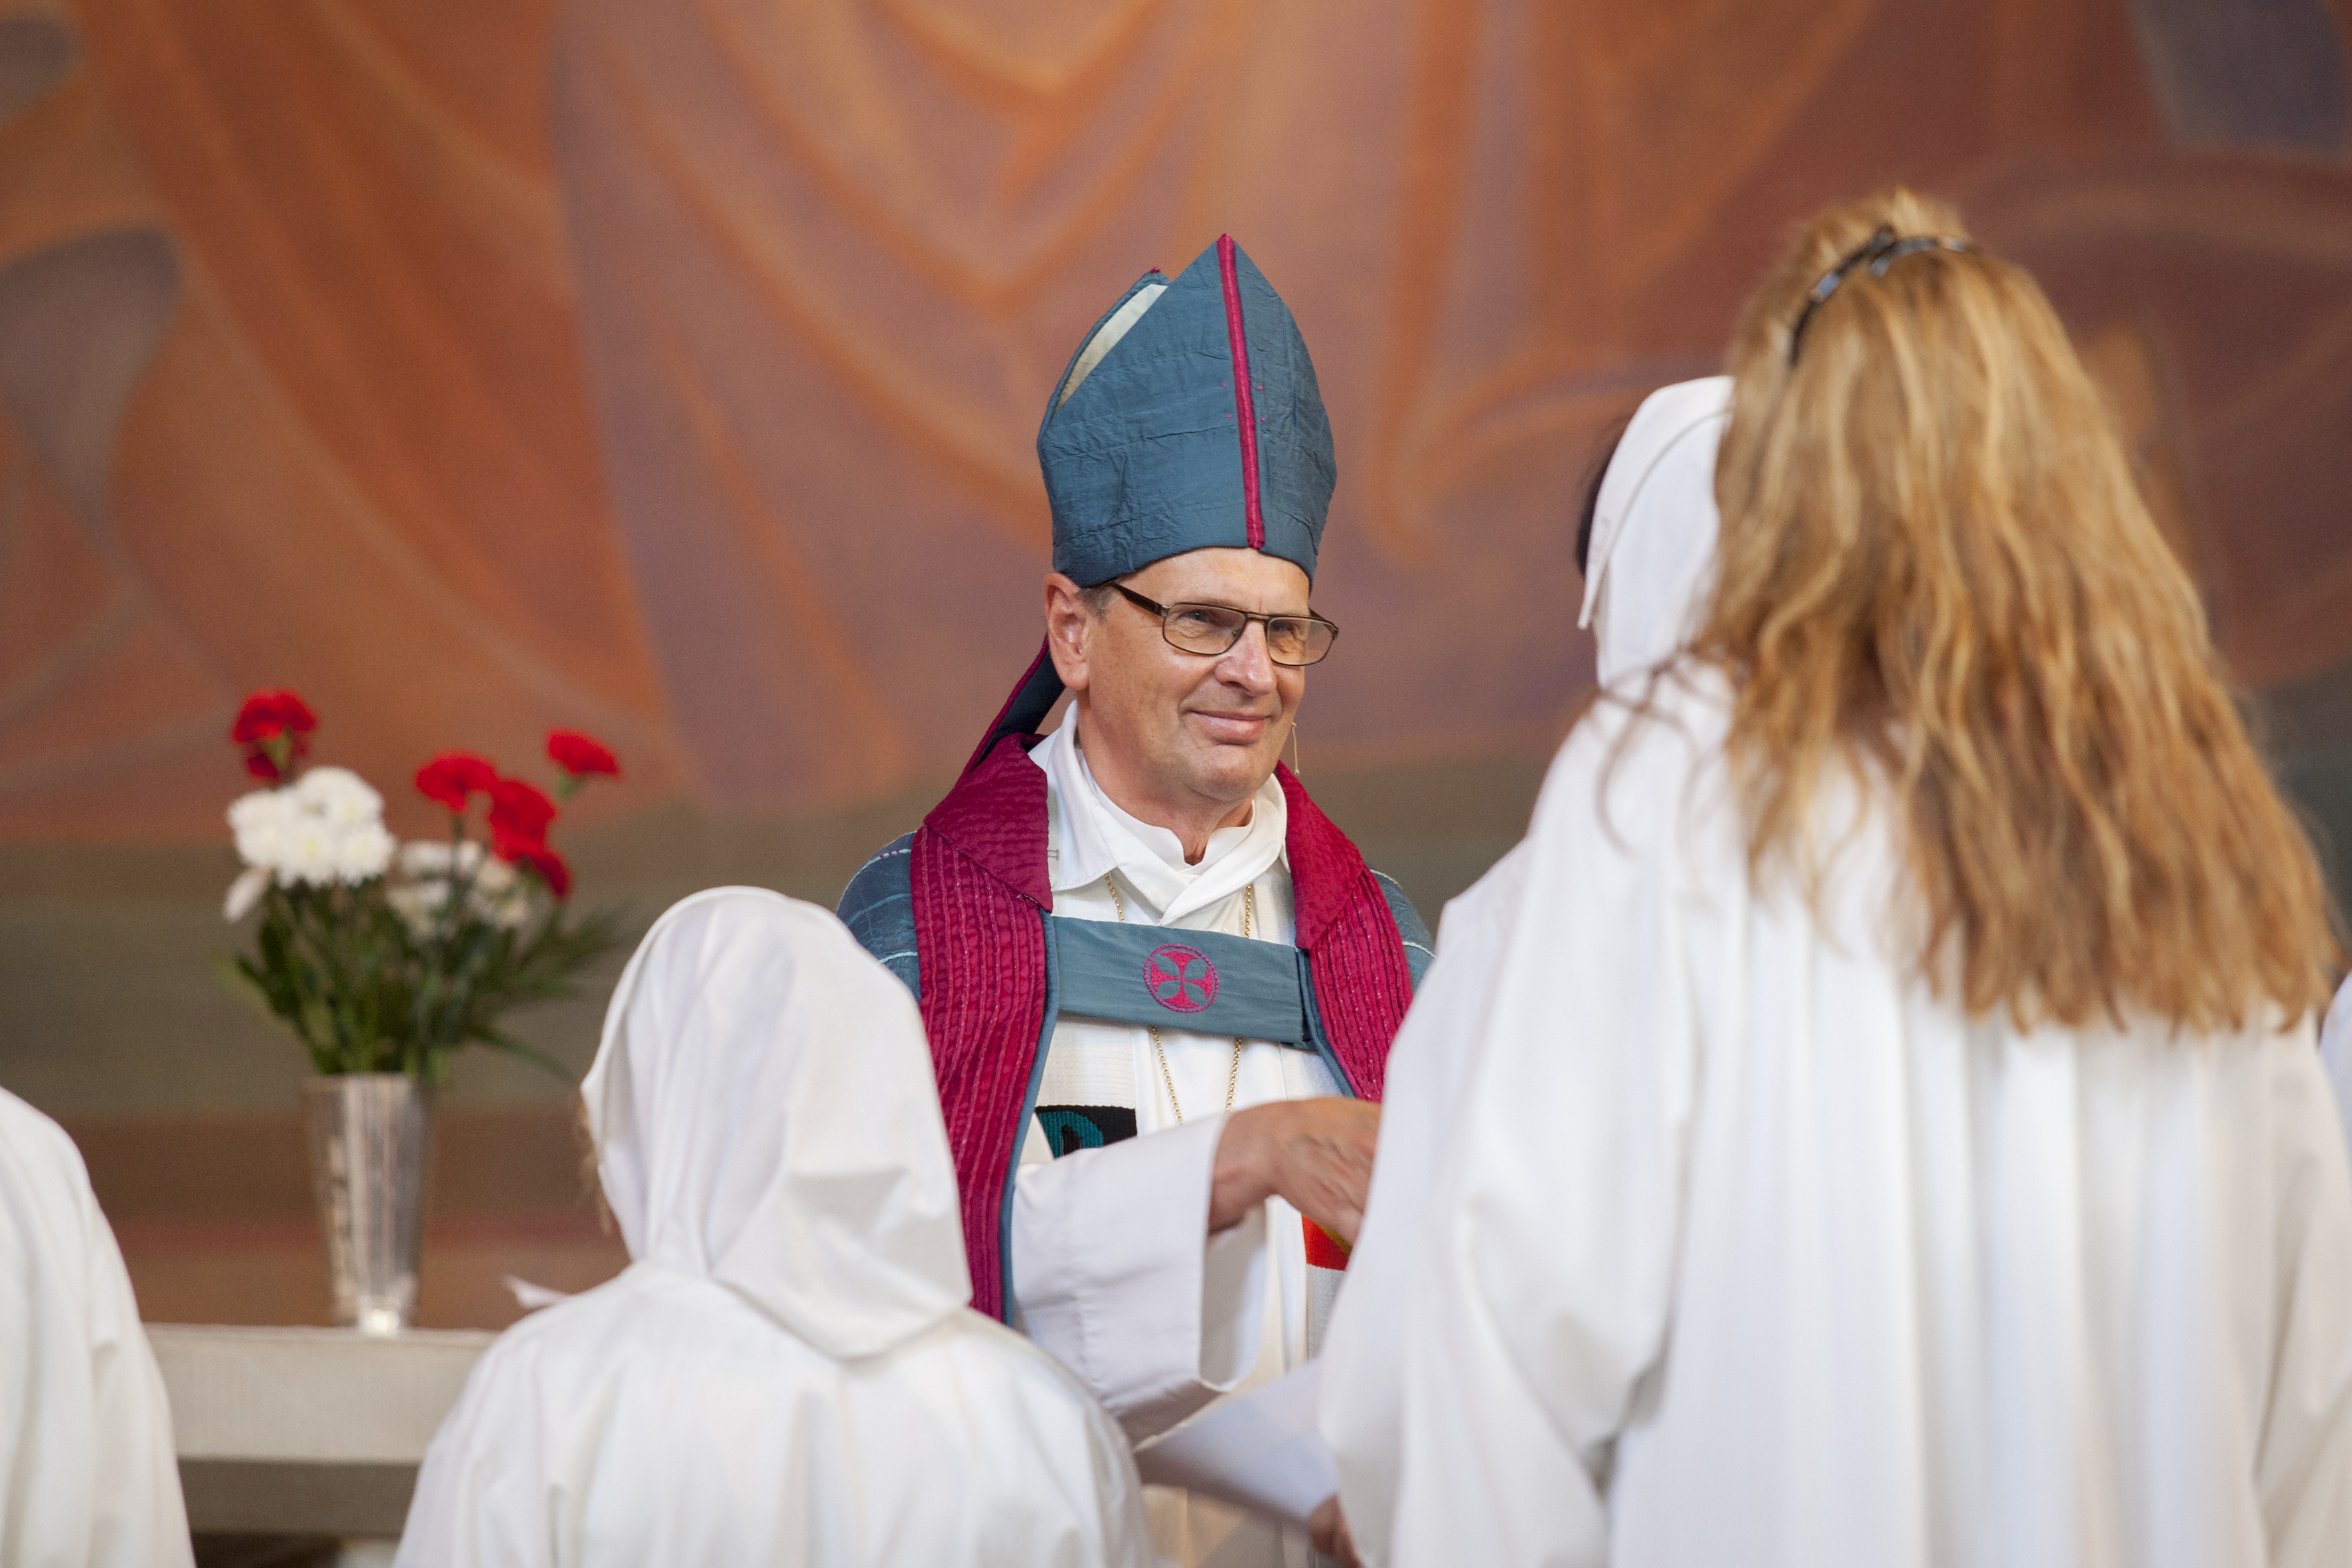 Biskop Per Eckerdal vid prästvigning 2014